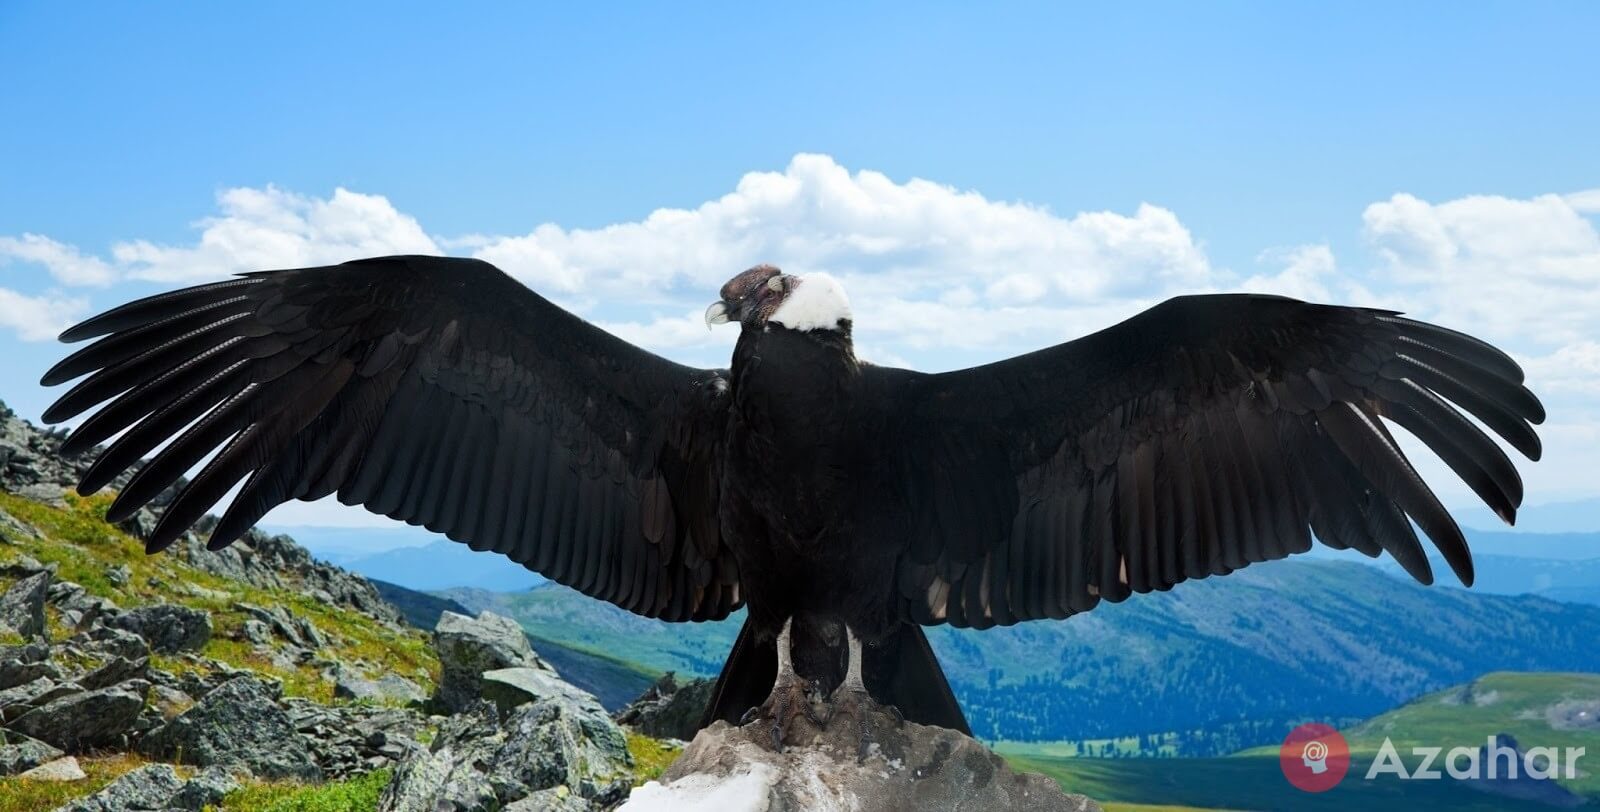 The Andean Condor, South America